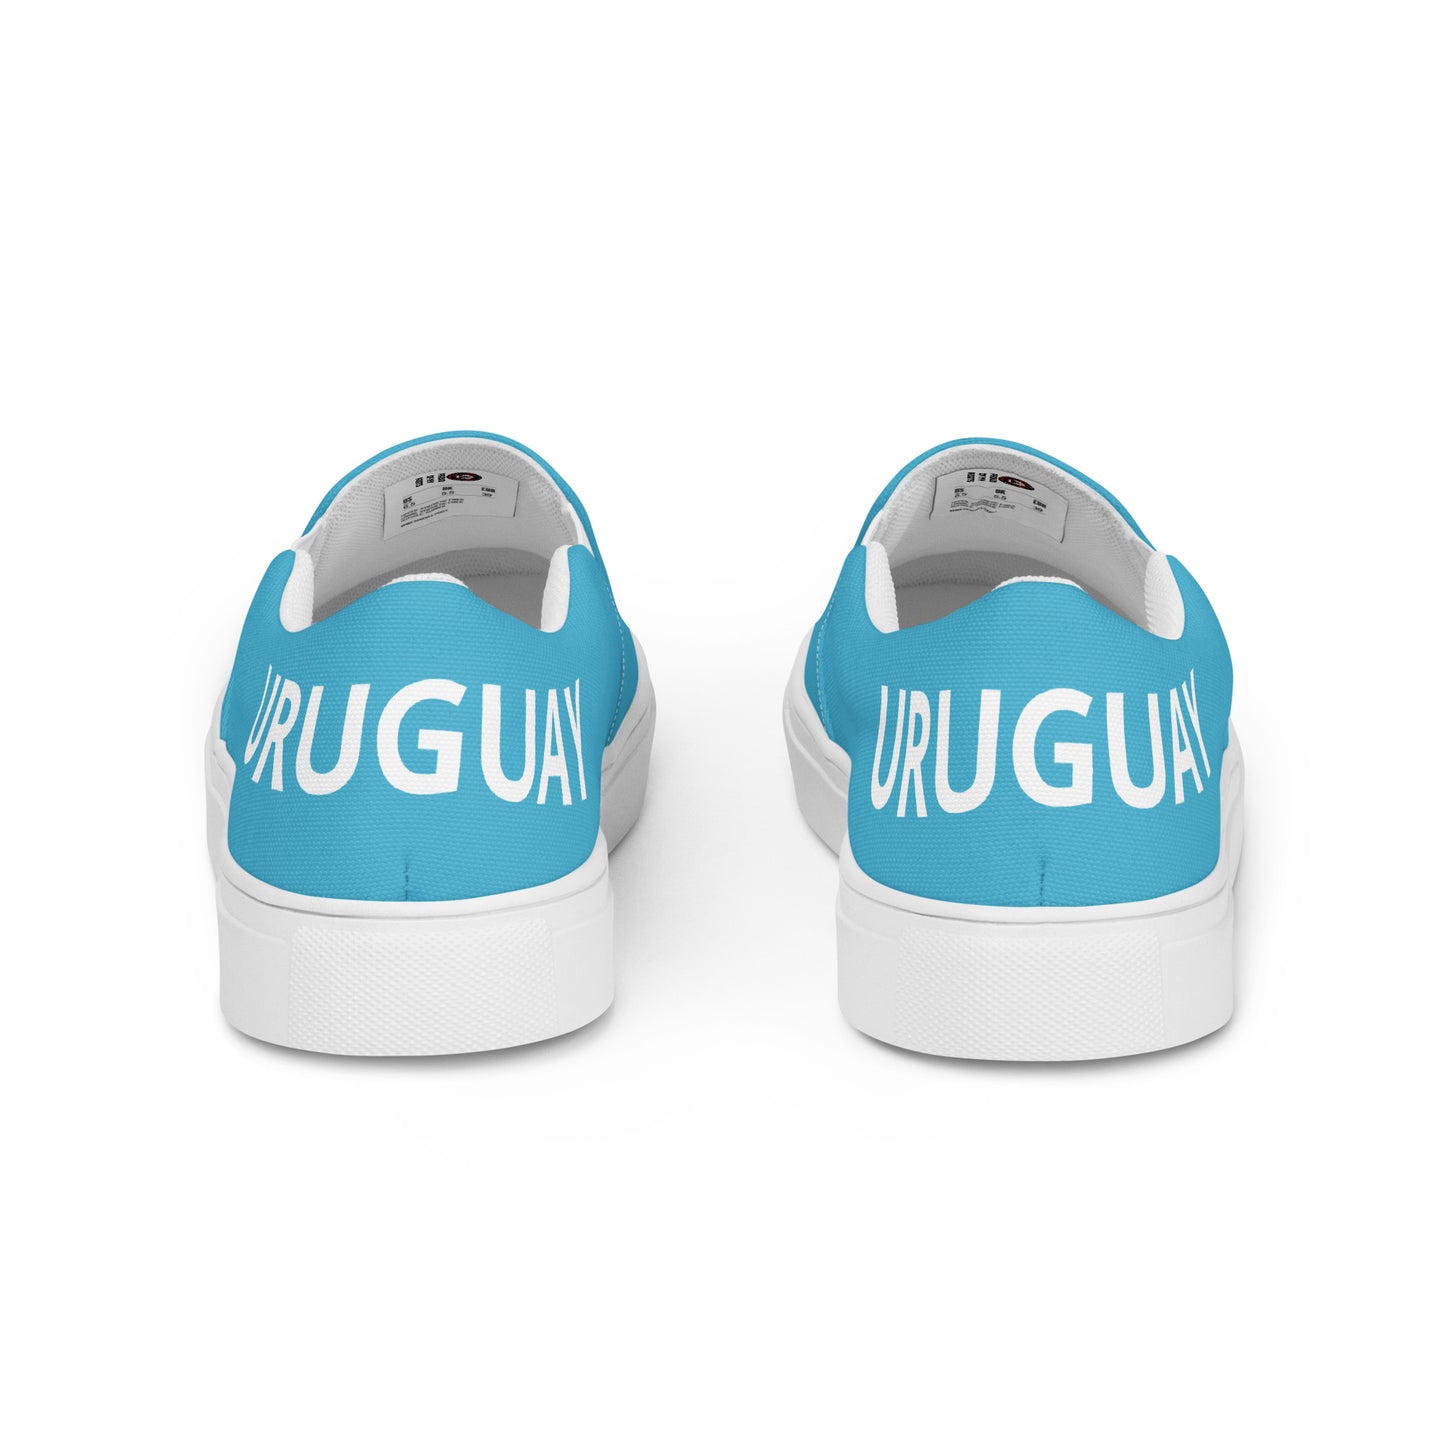 Uruguay - Hombre - Celeste - Zapatos Slip-on